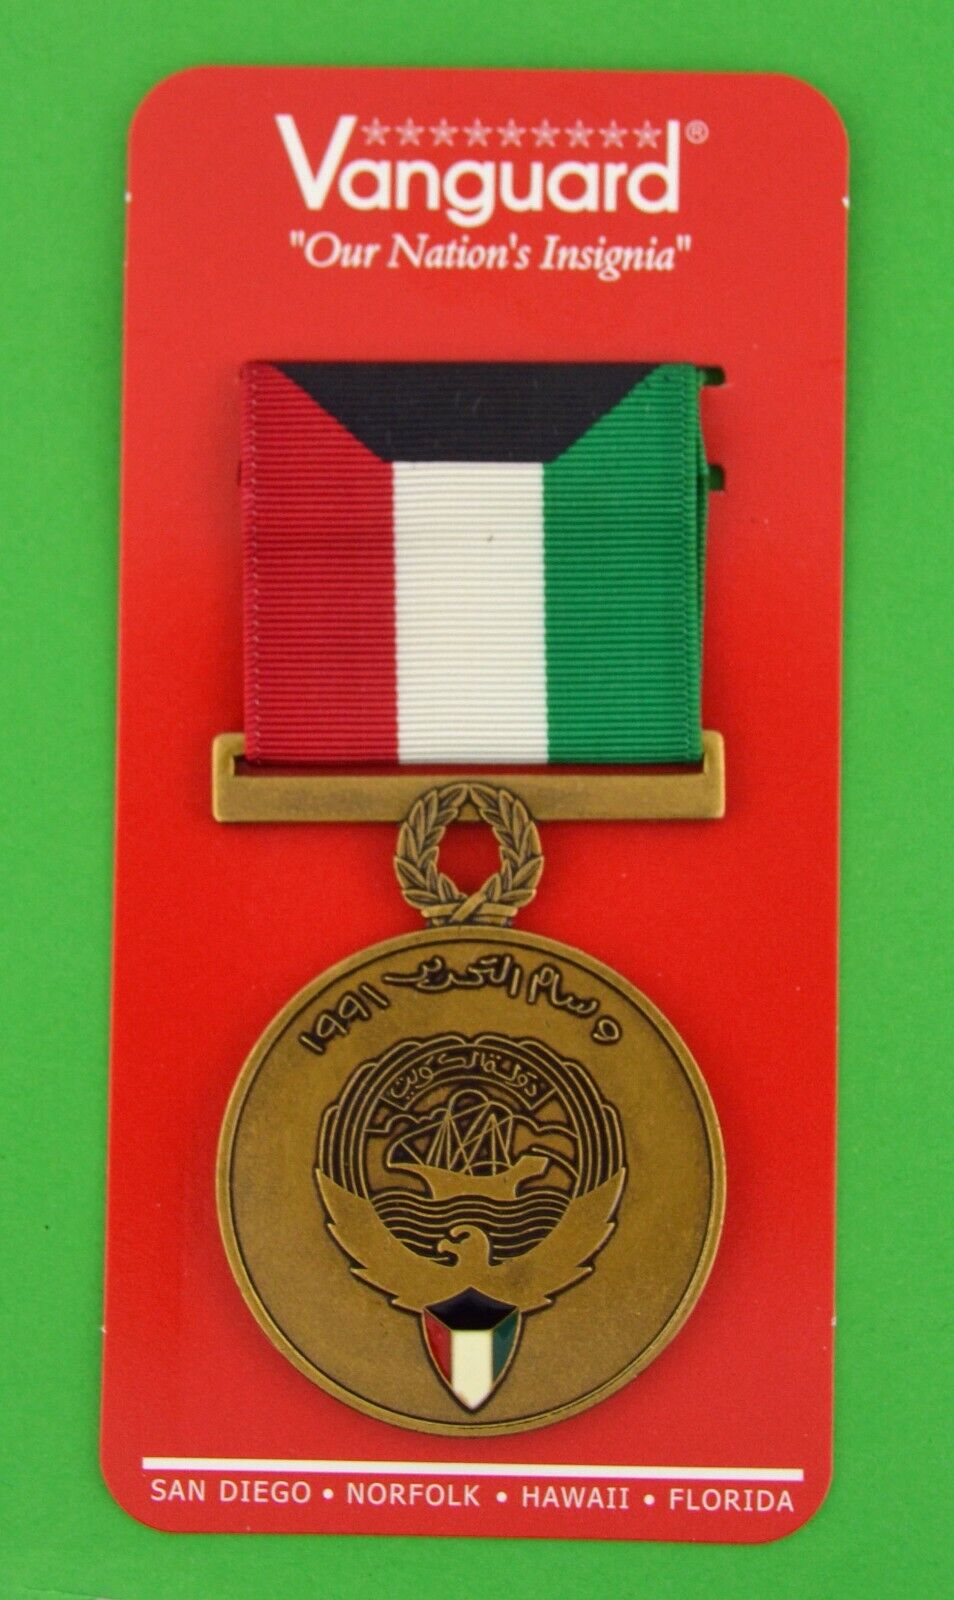 Kuwait Liberation Government of Kuwait Medal - Full size - USA made - VANGUARD